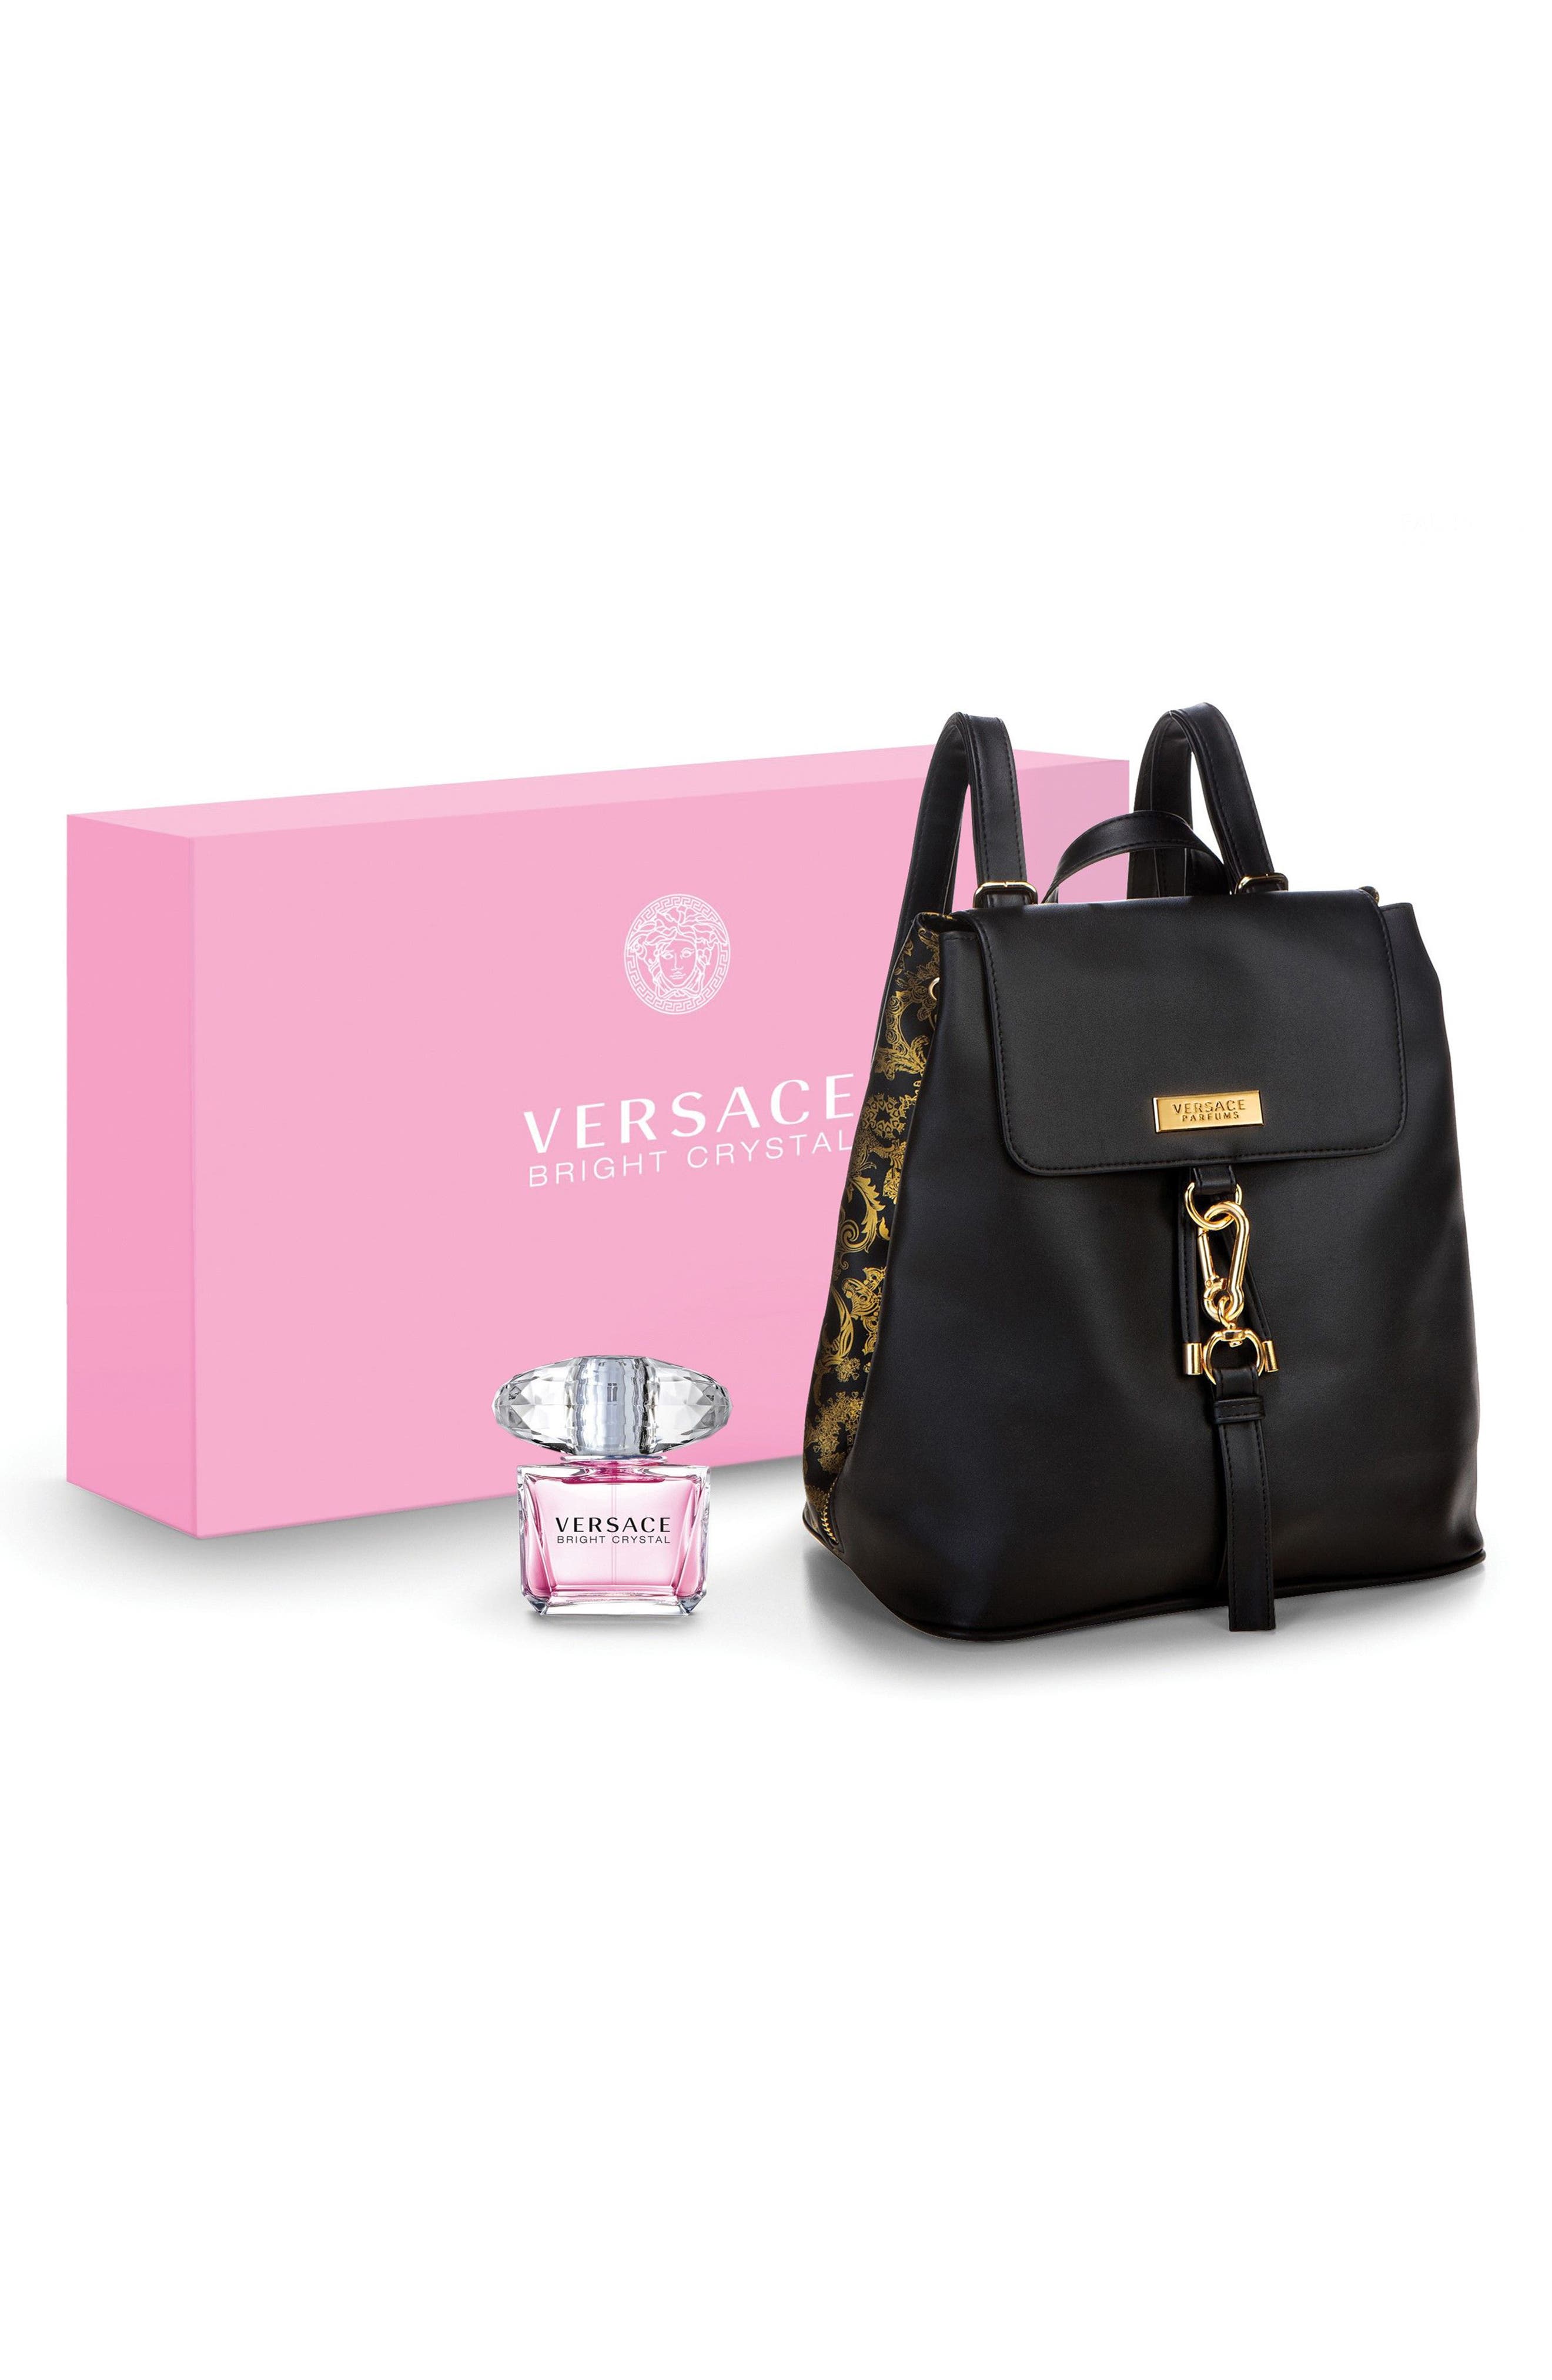 versace backpack cologne gift set